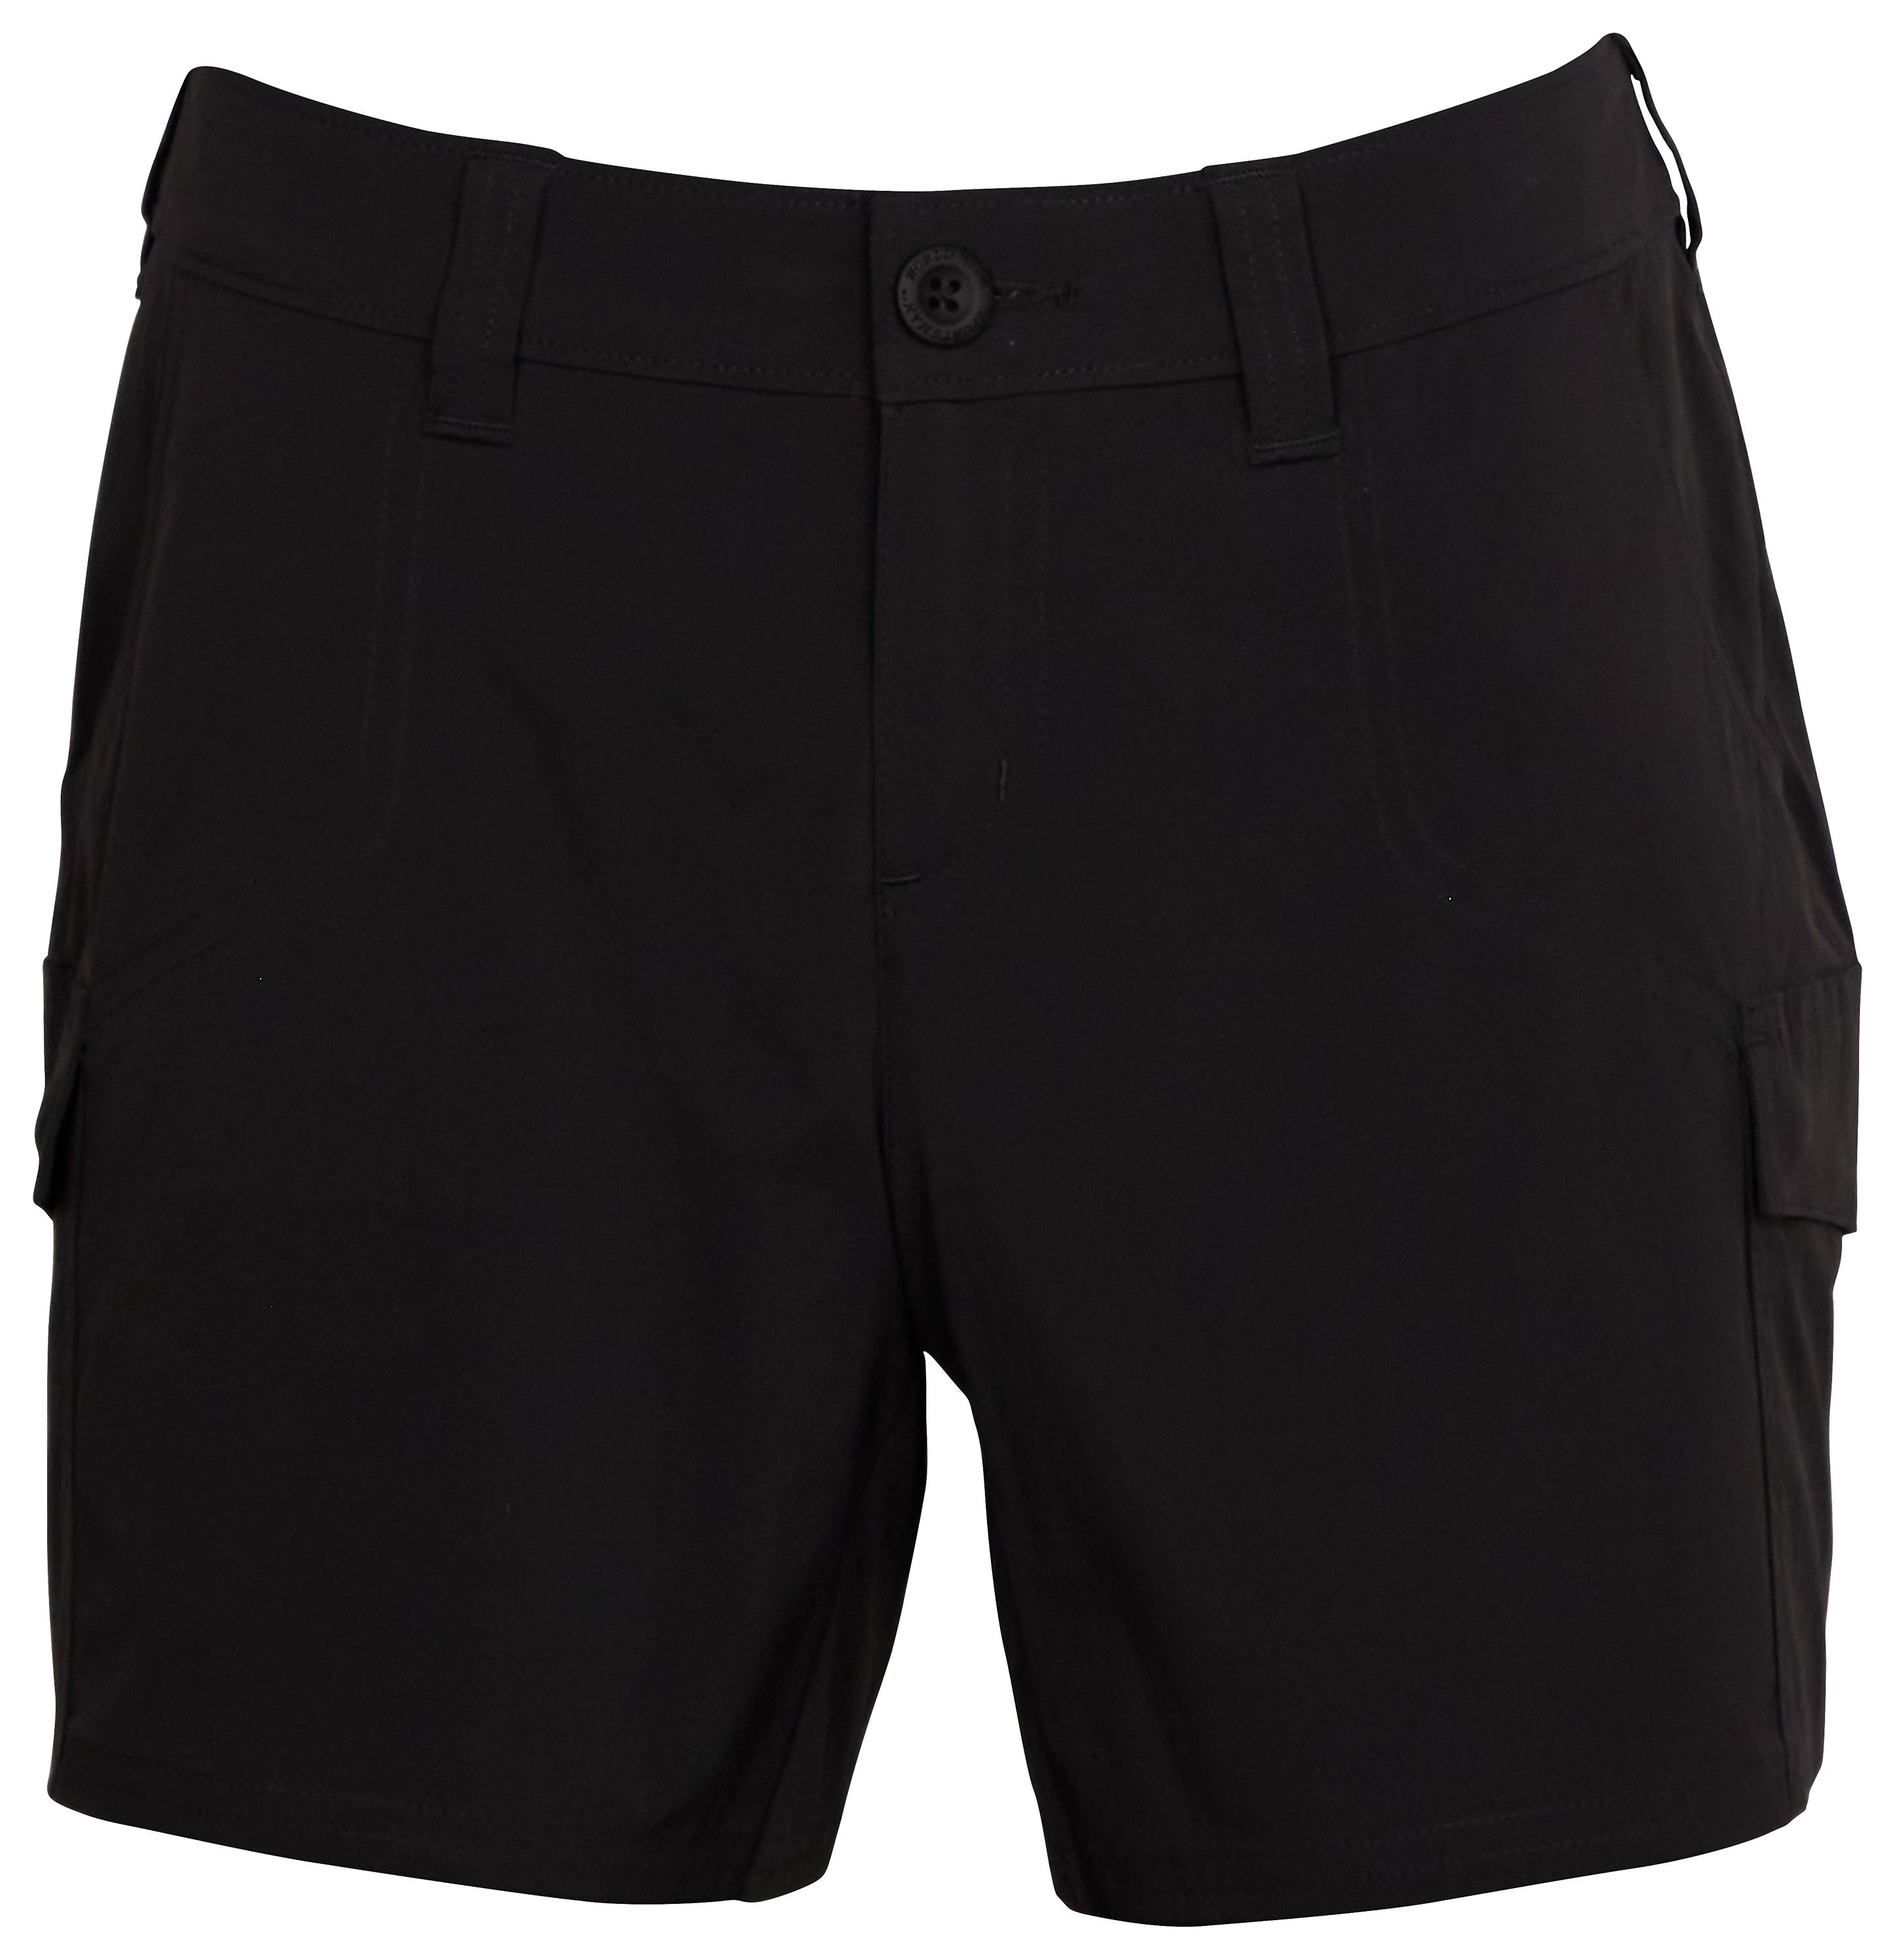 World Wide Sportsman Ripstop Cargo Shorts for Ladies - Jet Black - 2